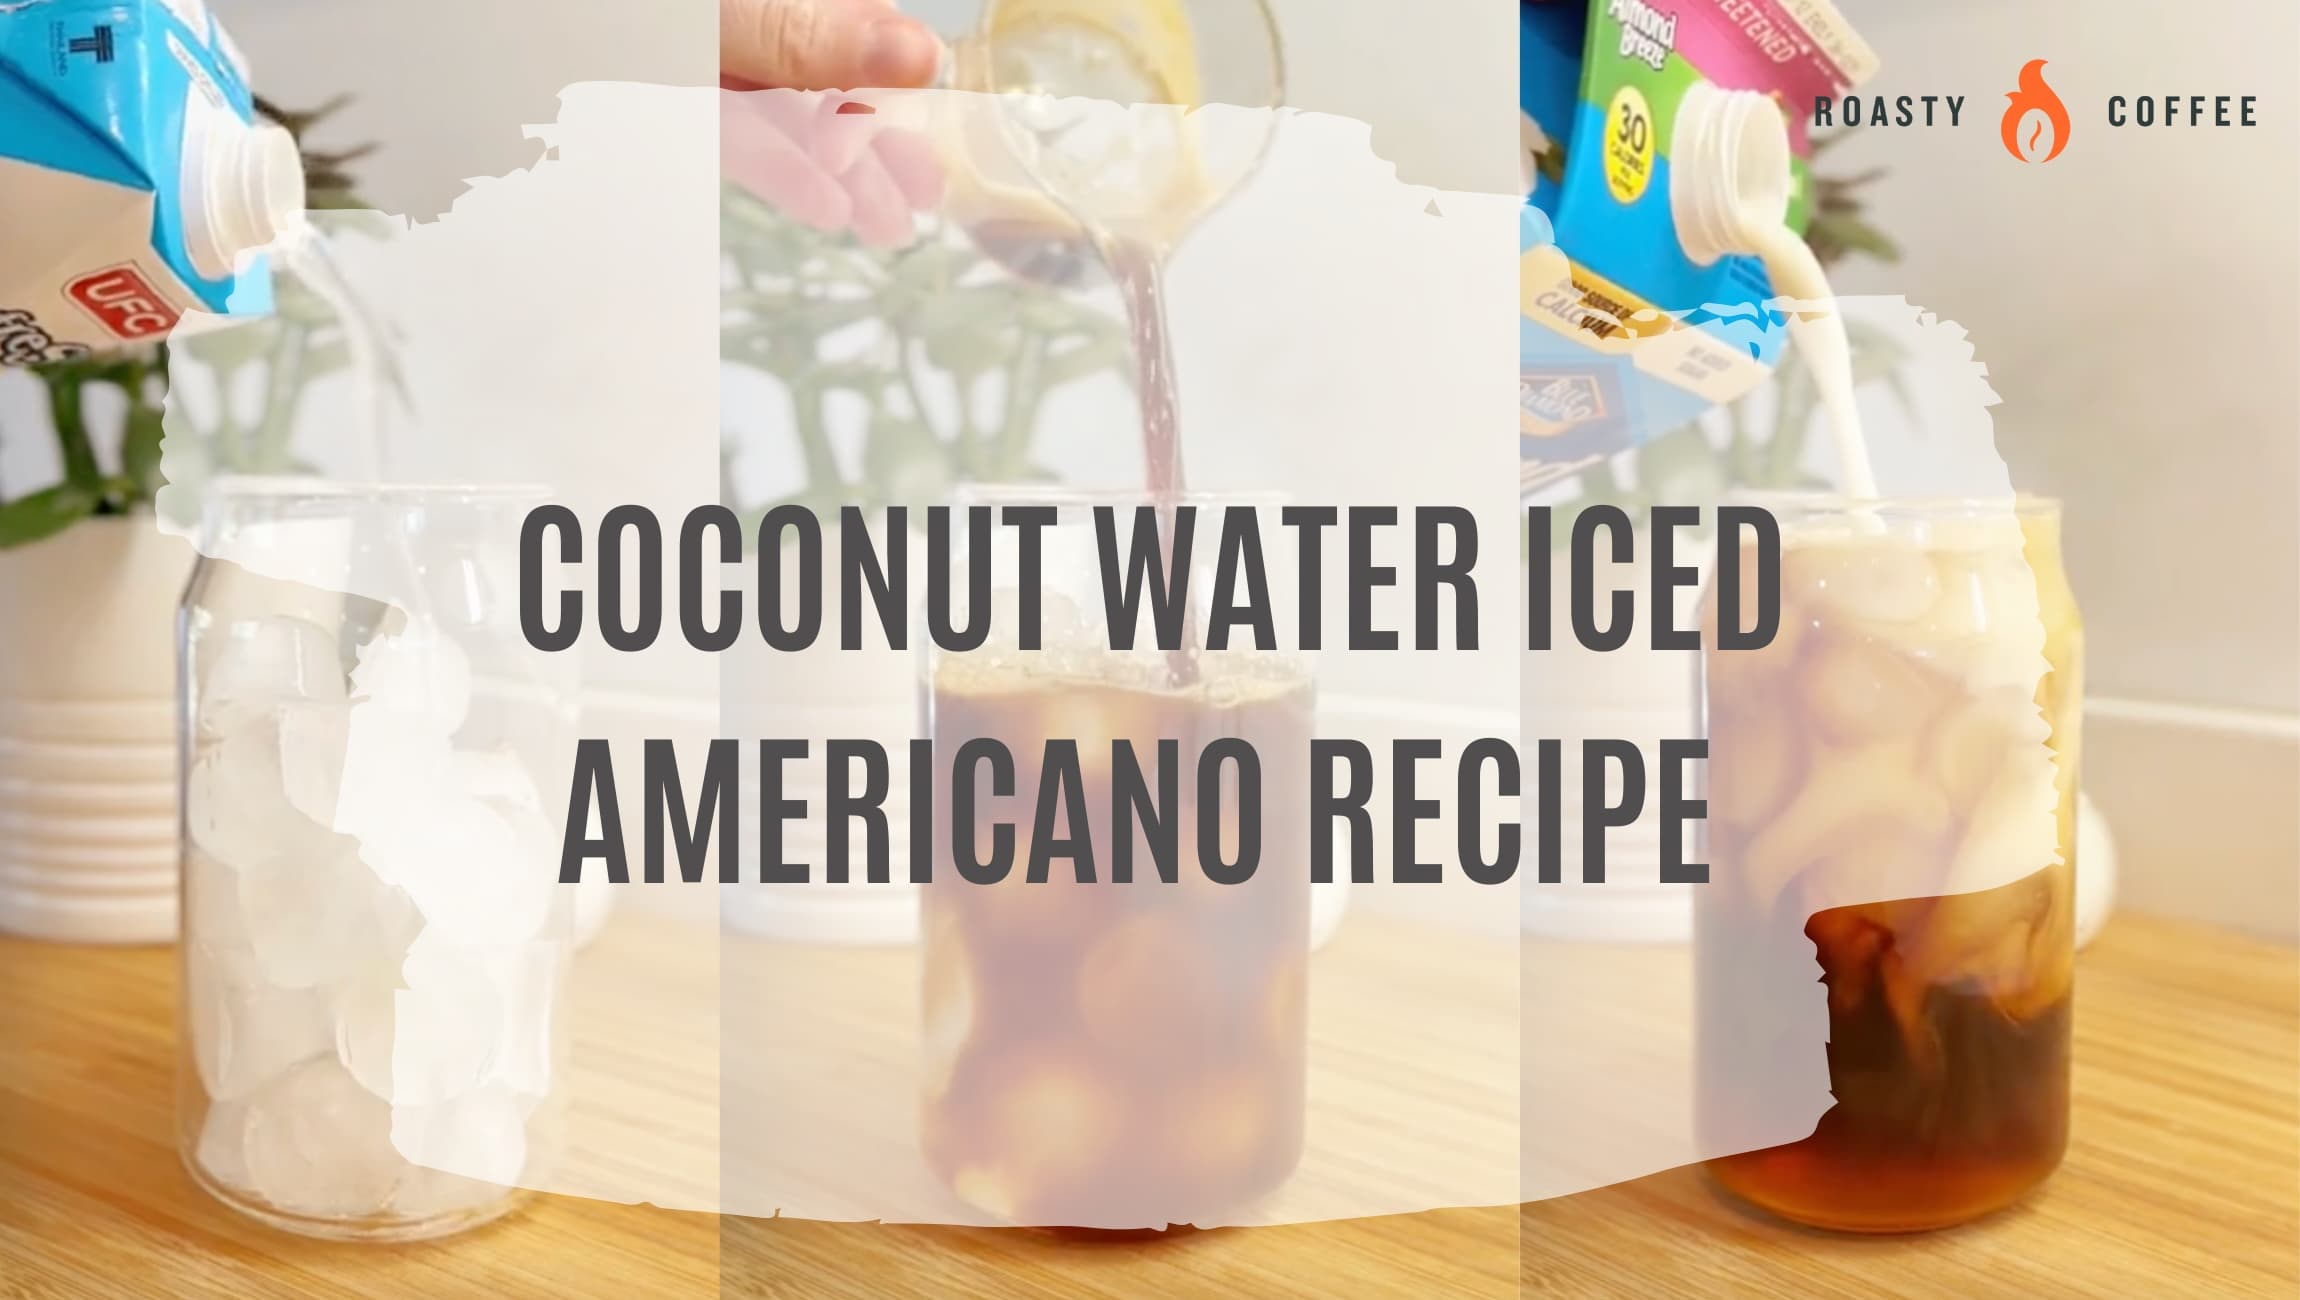 Coconut Water Iced Americano